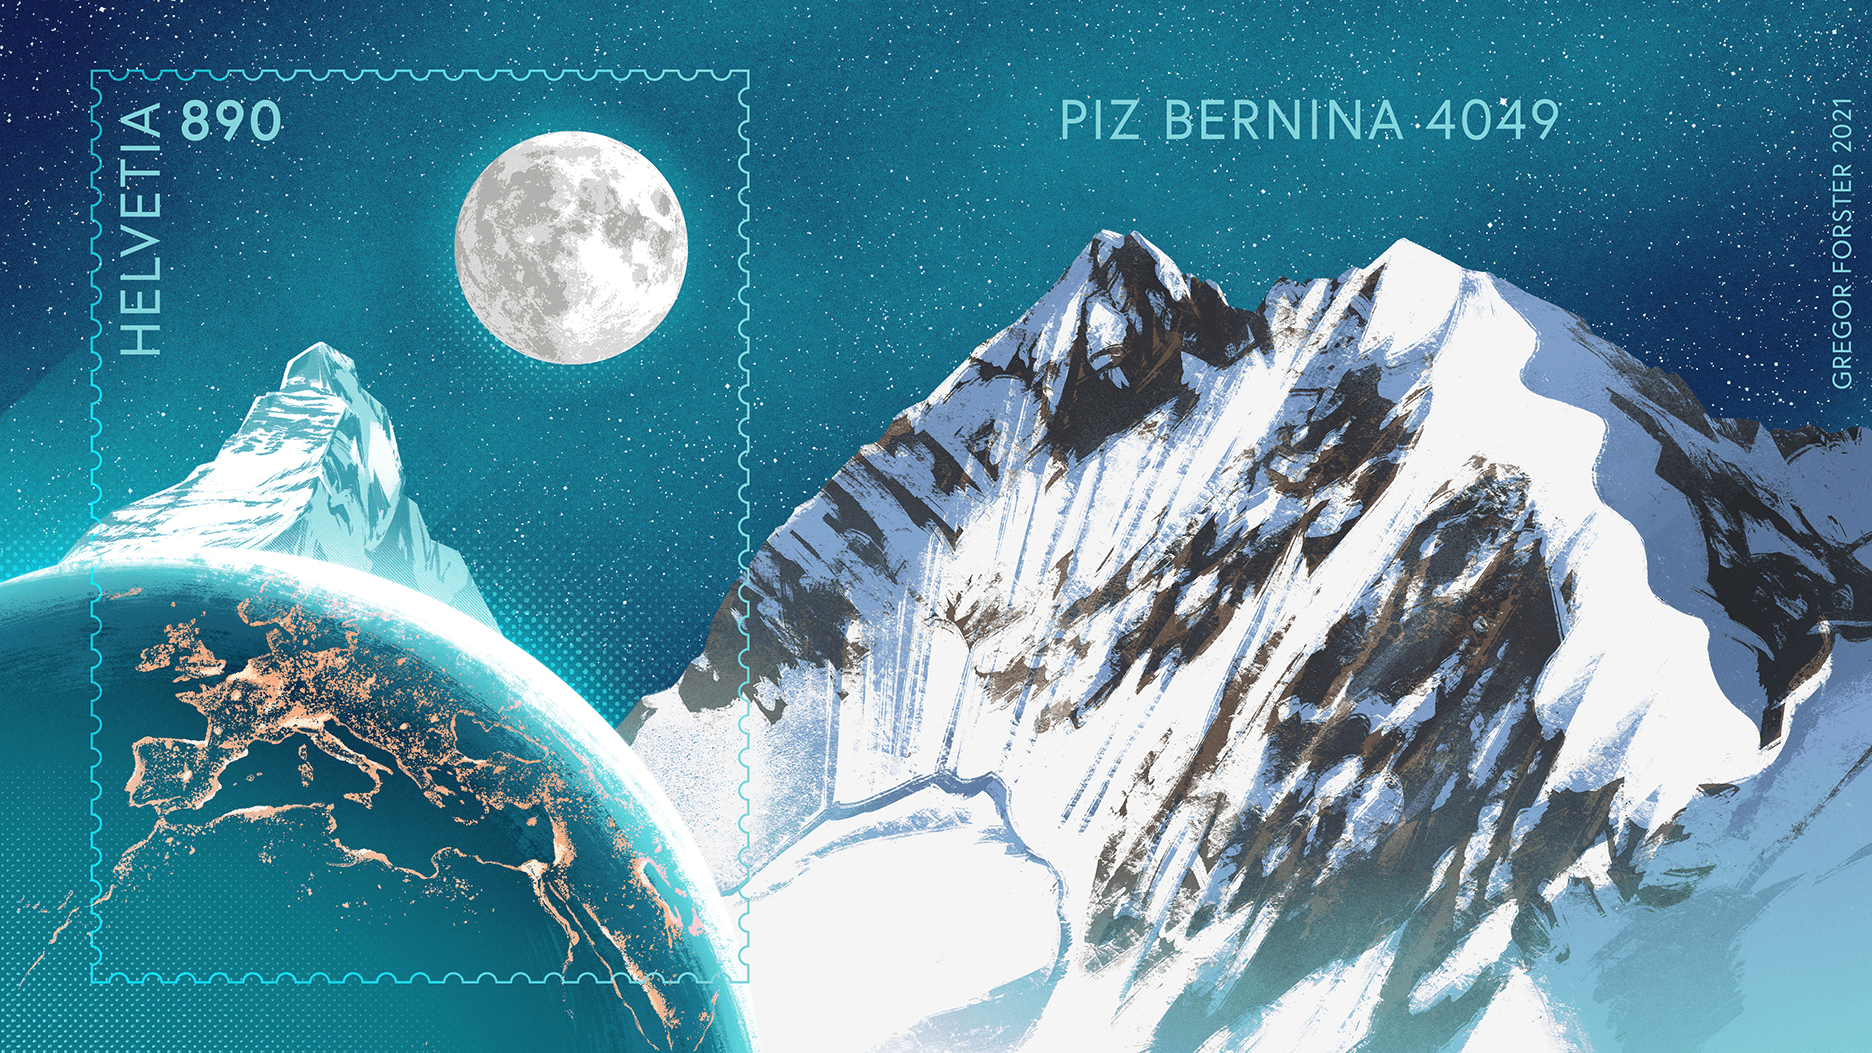 Piz Bernina